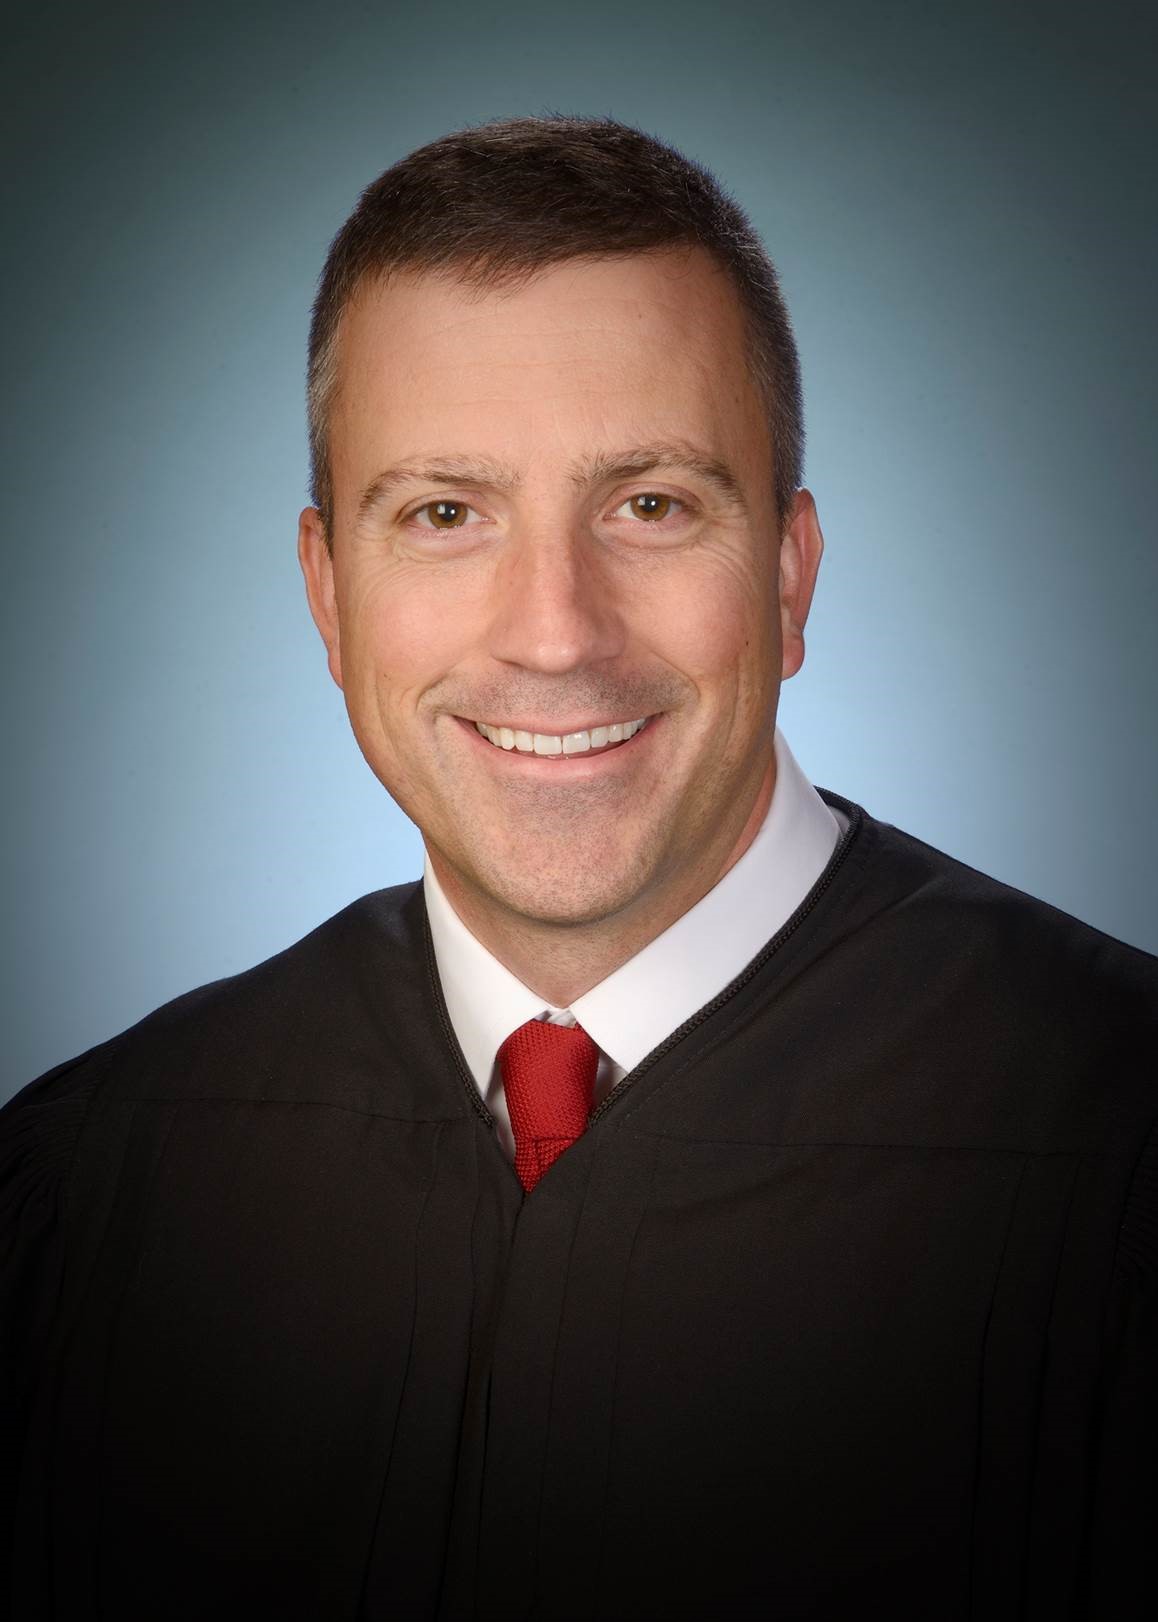 District Judge Trevor N. McFadden